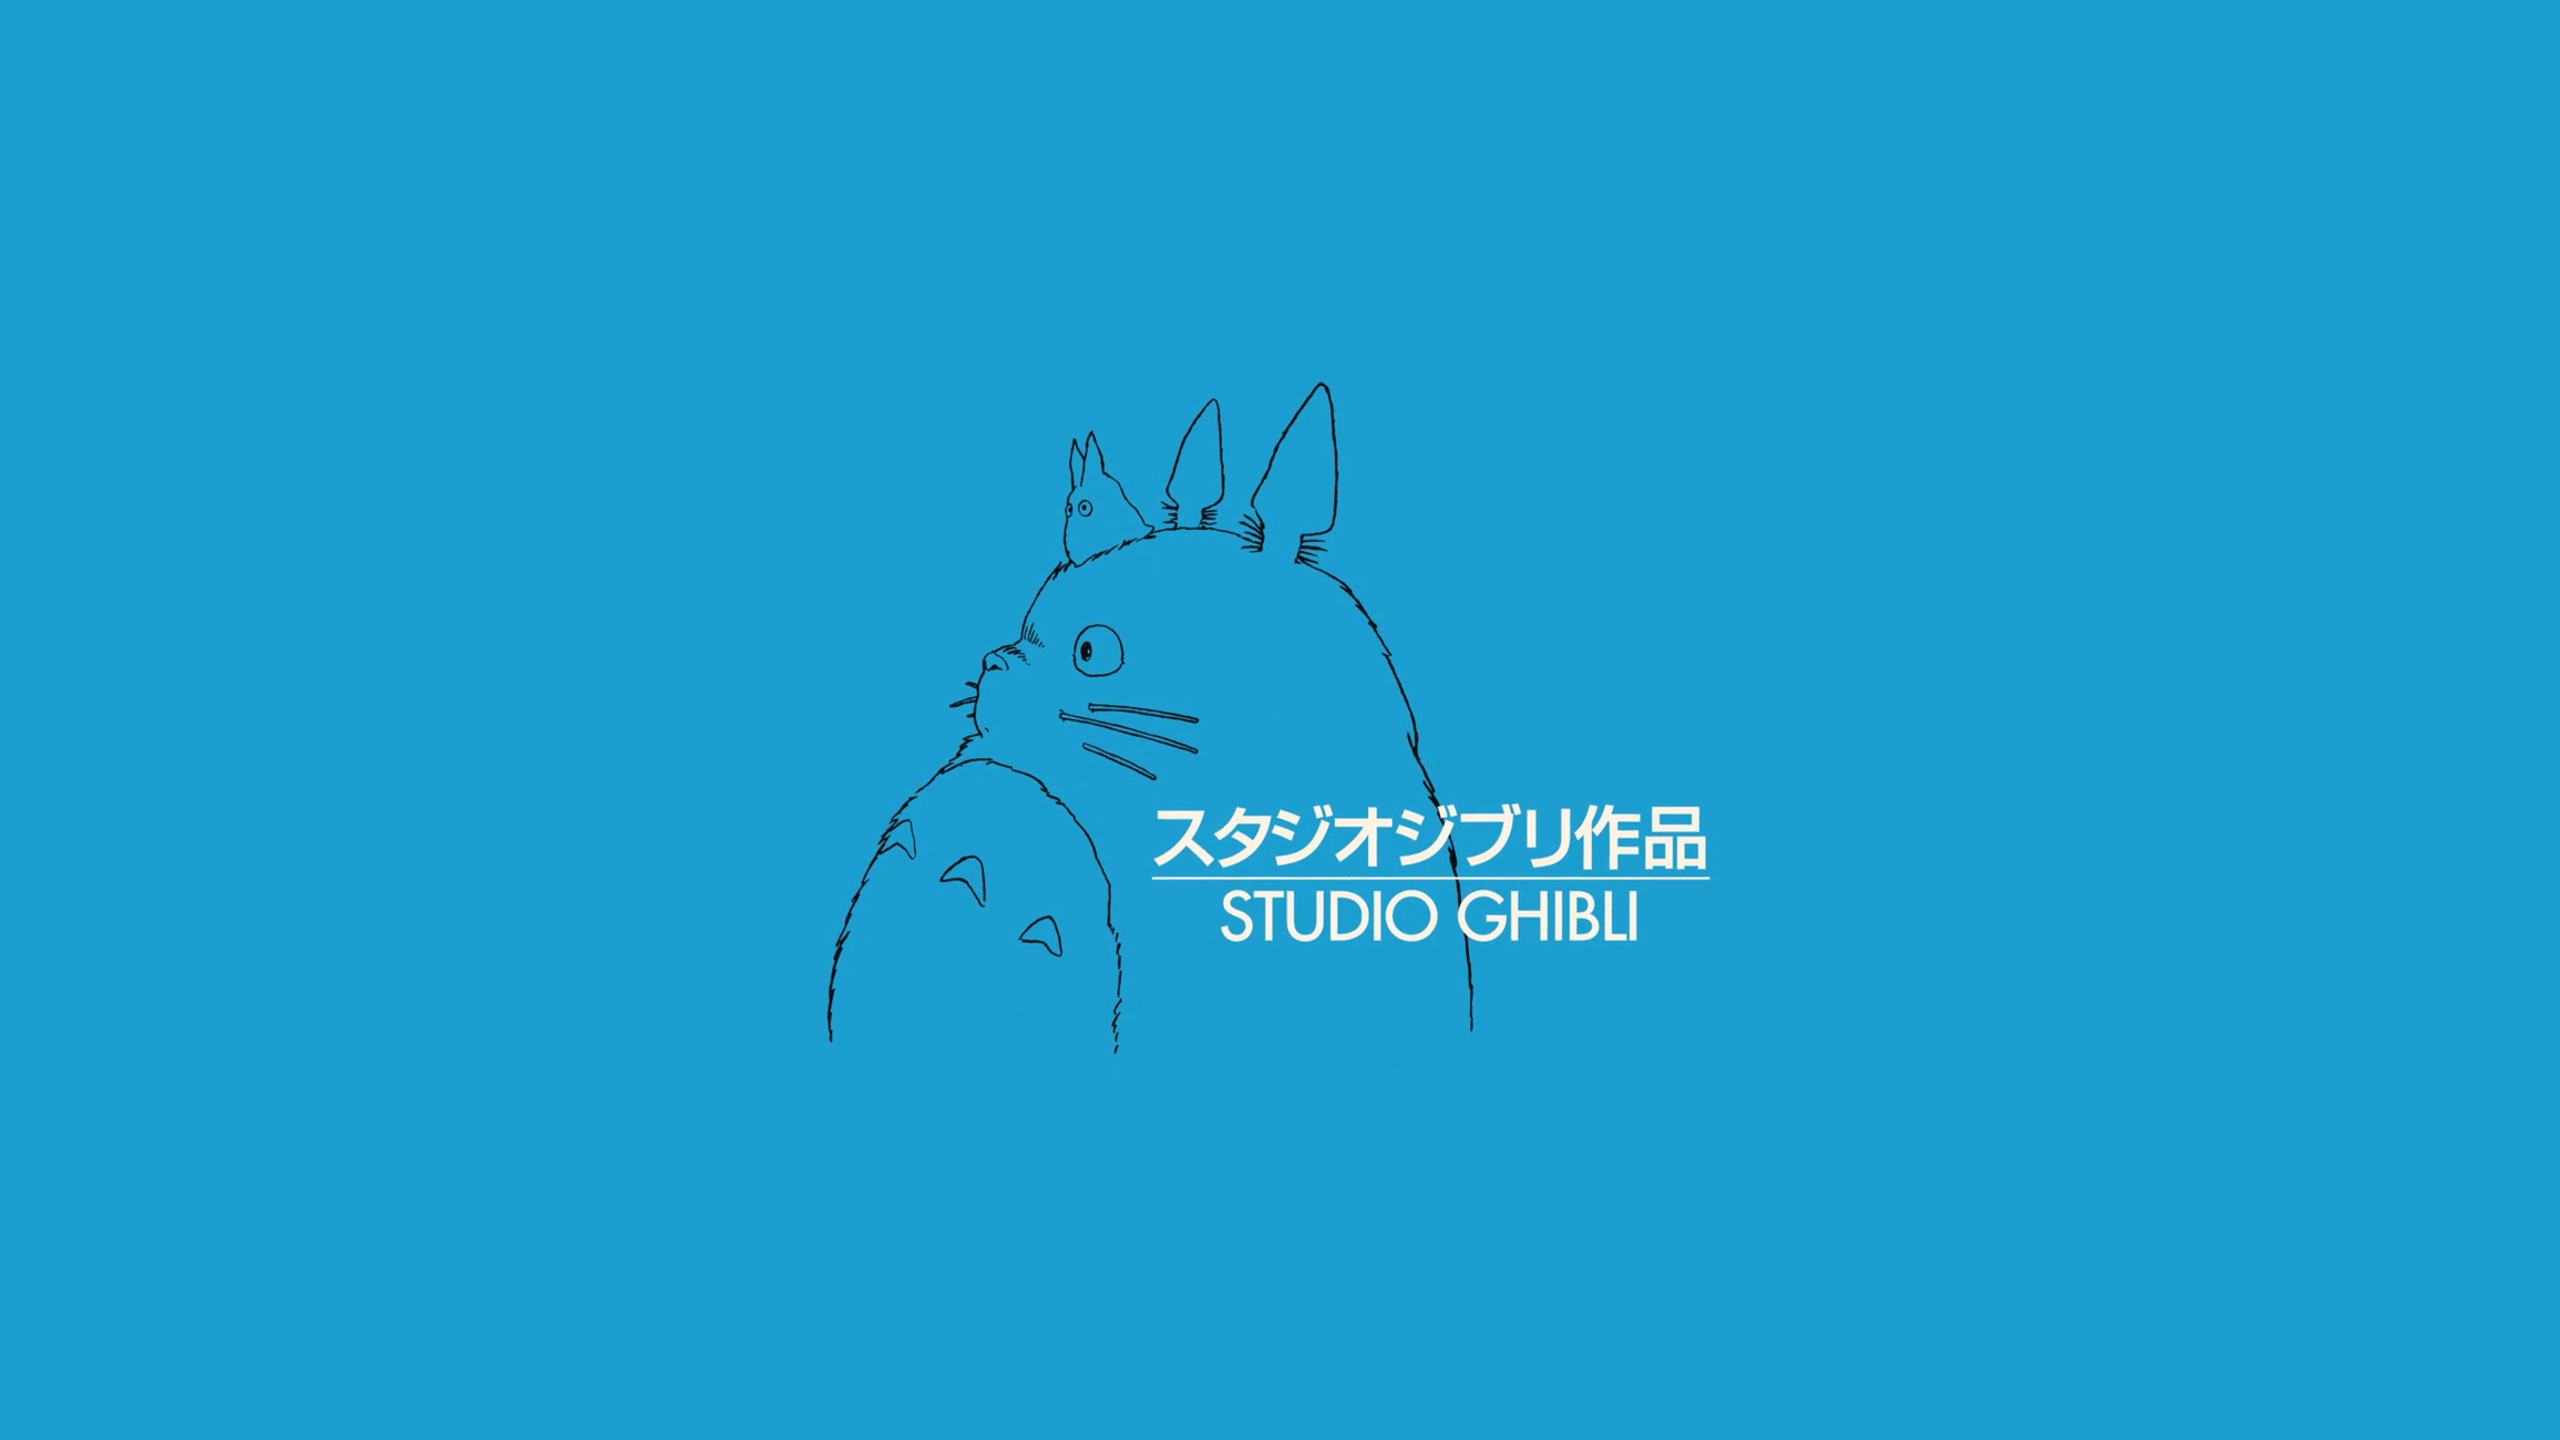 Гибли список. Студия гибли лого. Studio Ghibli логотип. Студия Дзибли логотип.